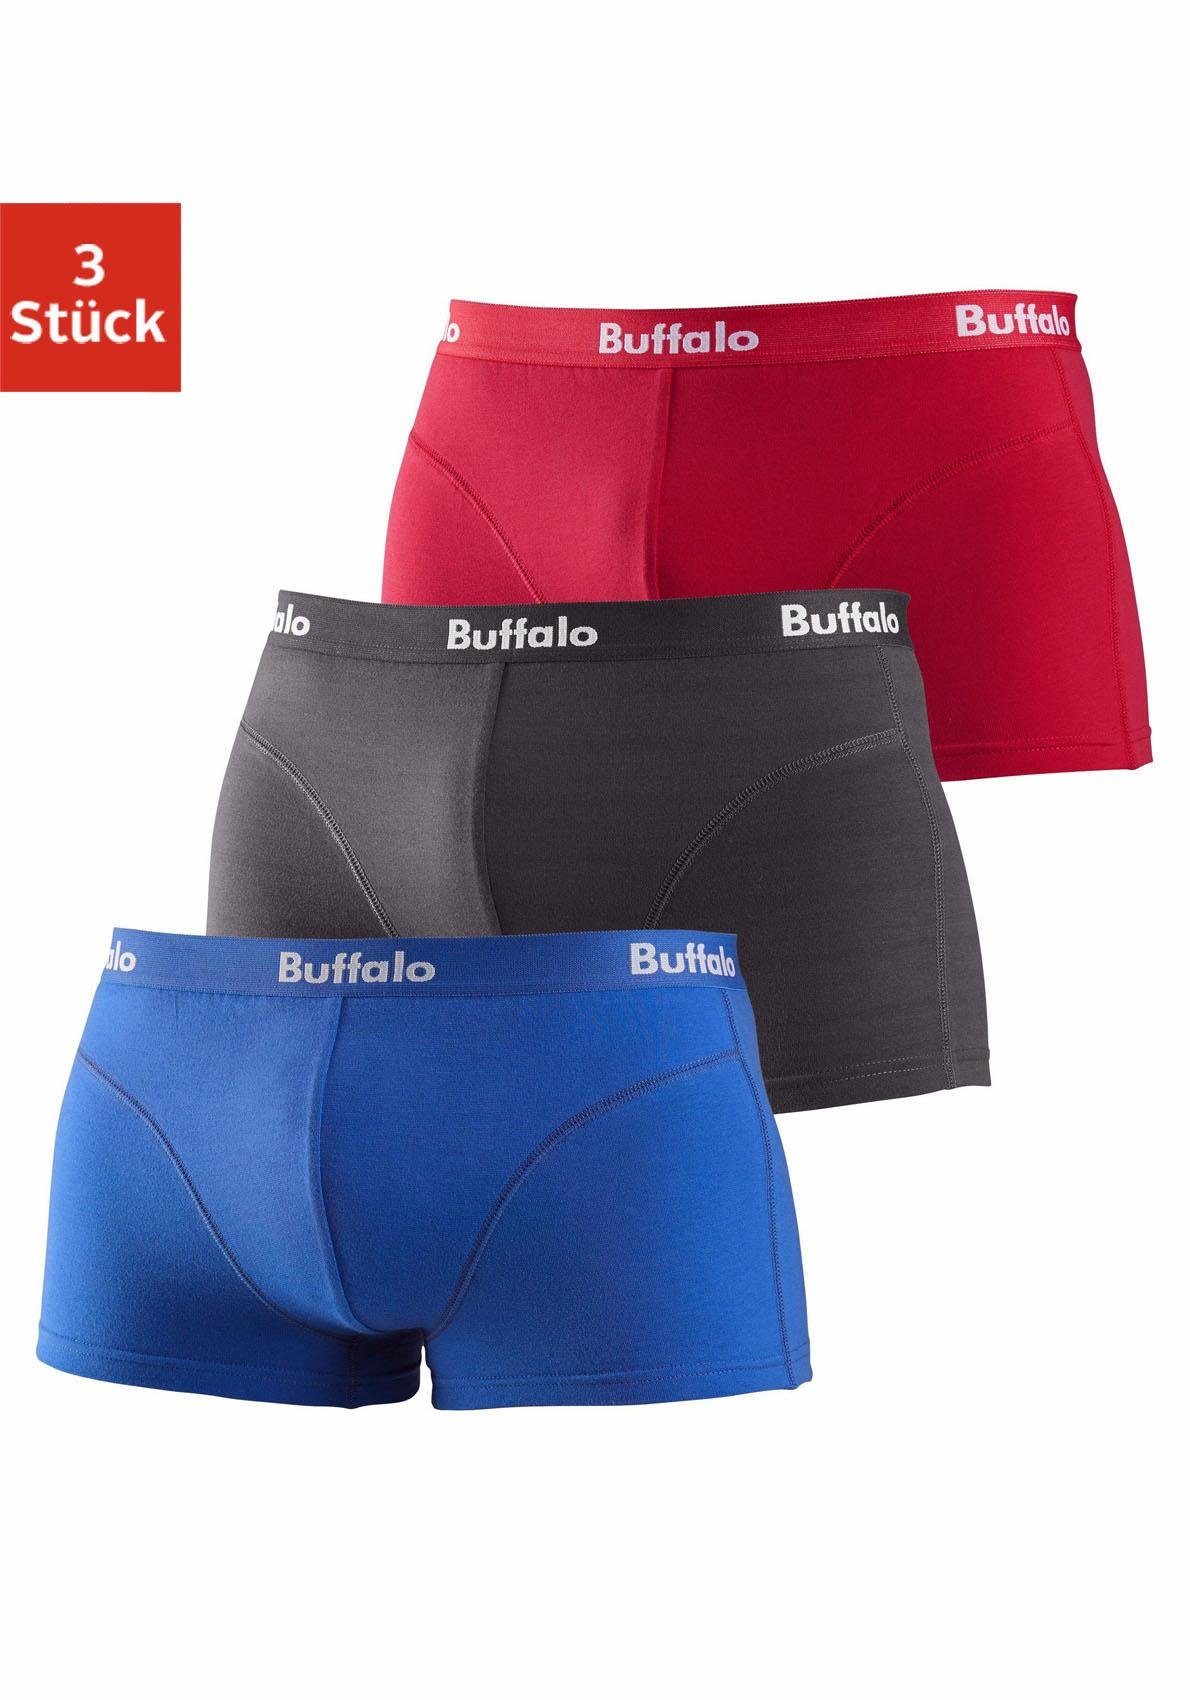 vorn Hipster rot, (Packung, royalblau, 3-St) Buffalo mit anthrazit Overlock-Nähten